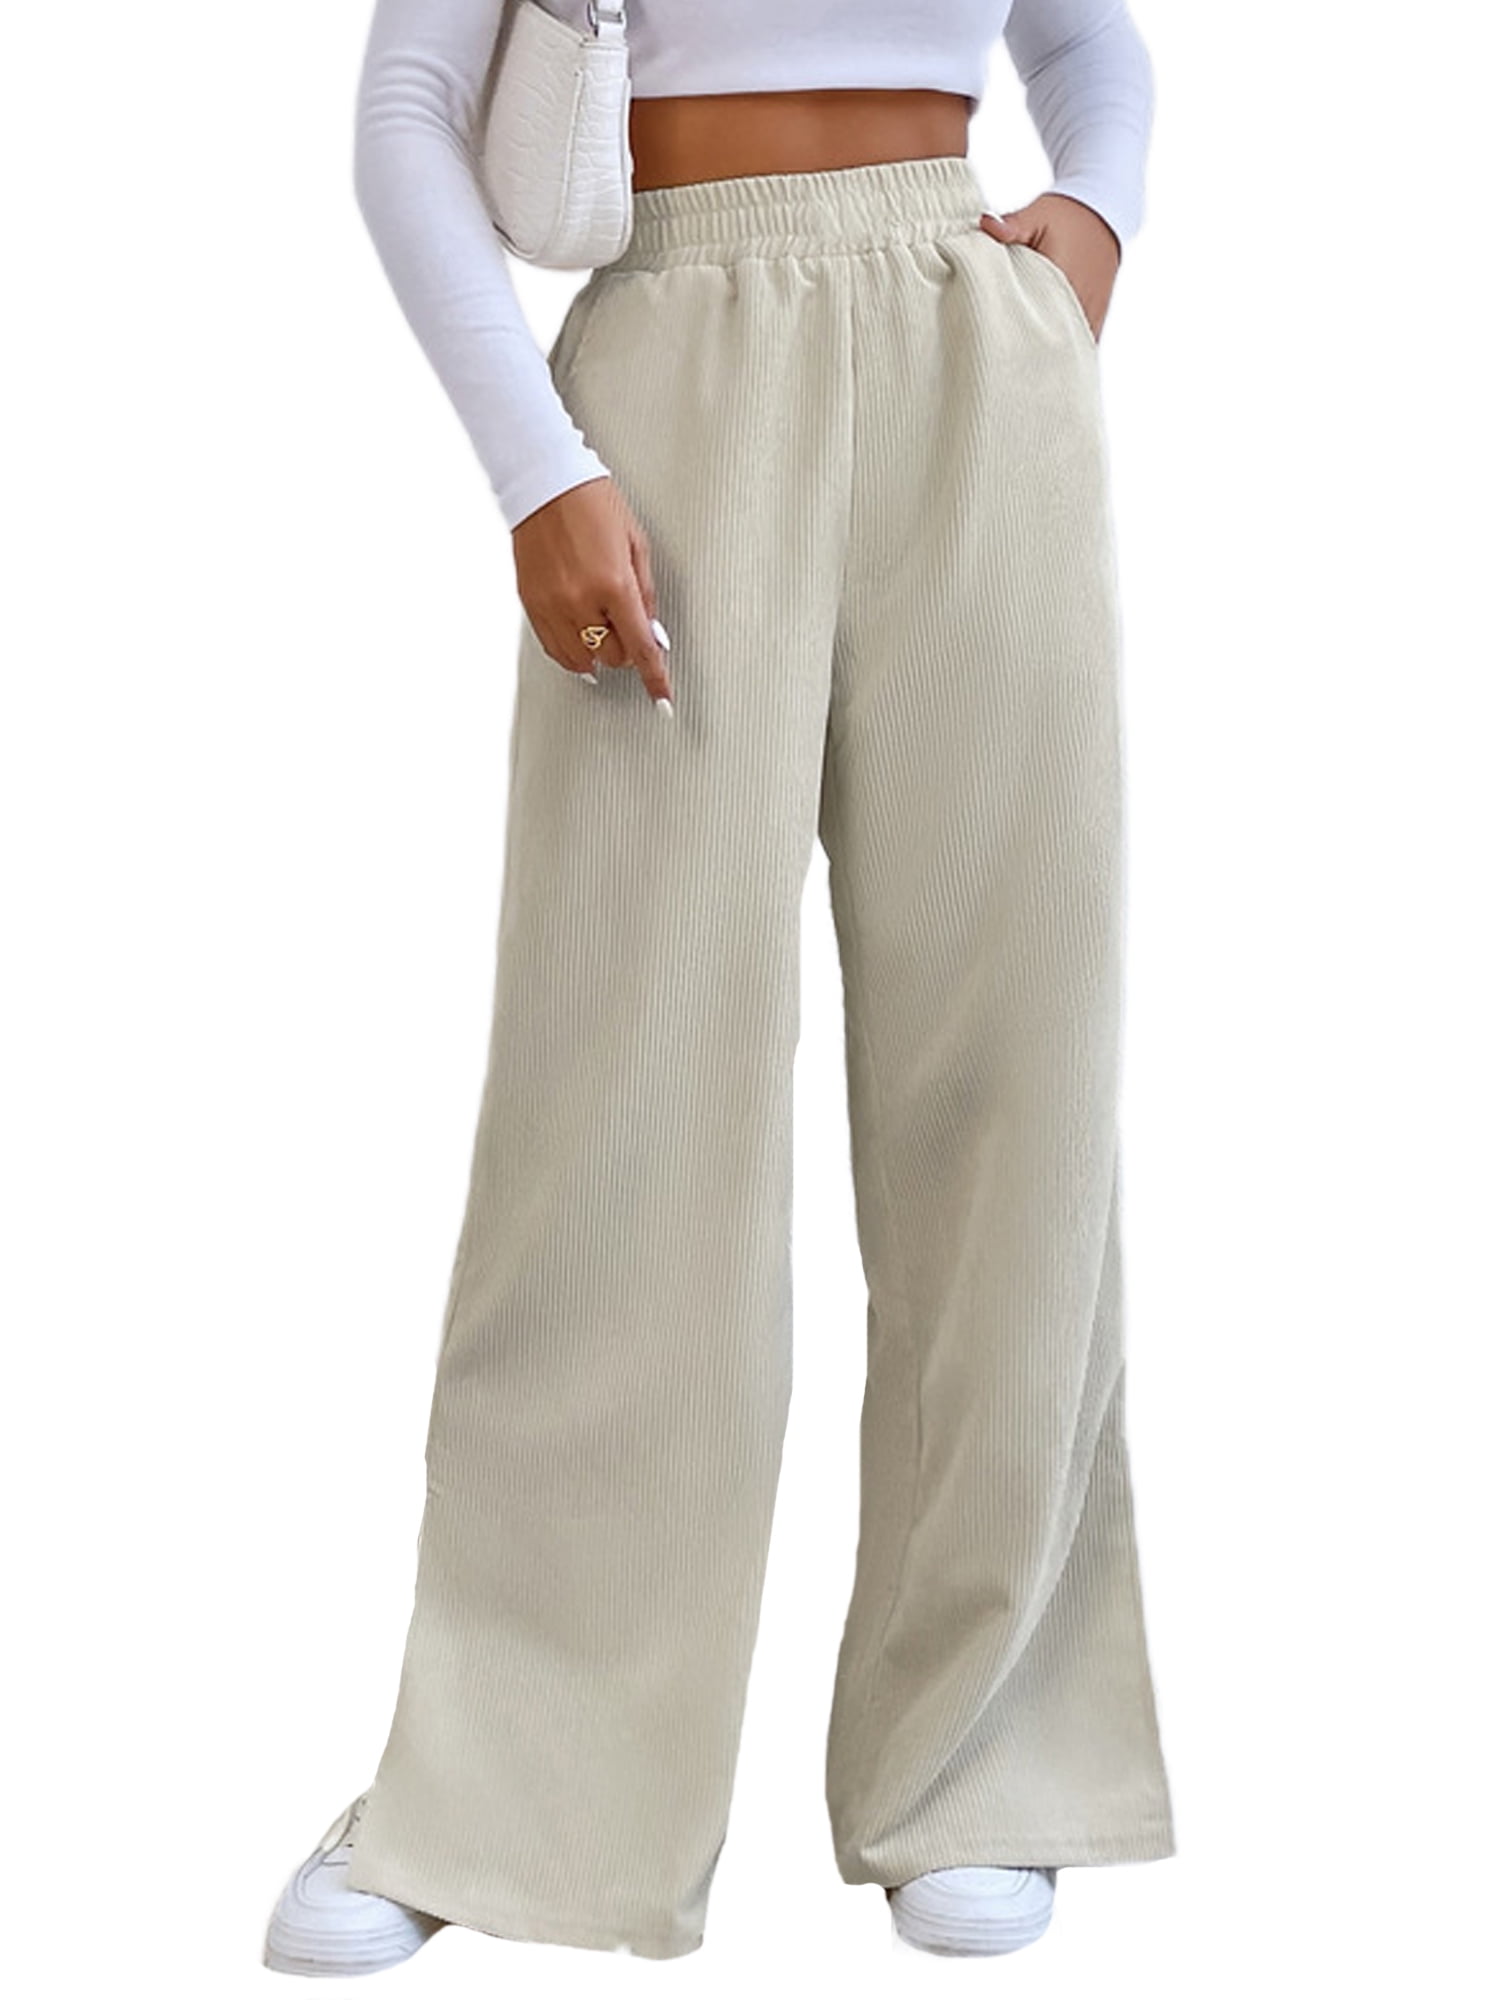 Ruffle Sleeve Black Top & Orange Strip Straight Pant, Daily Wear Co-Ord Set  S-XL | eBay